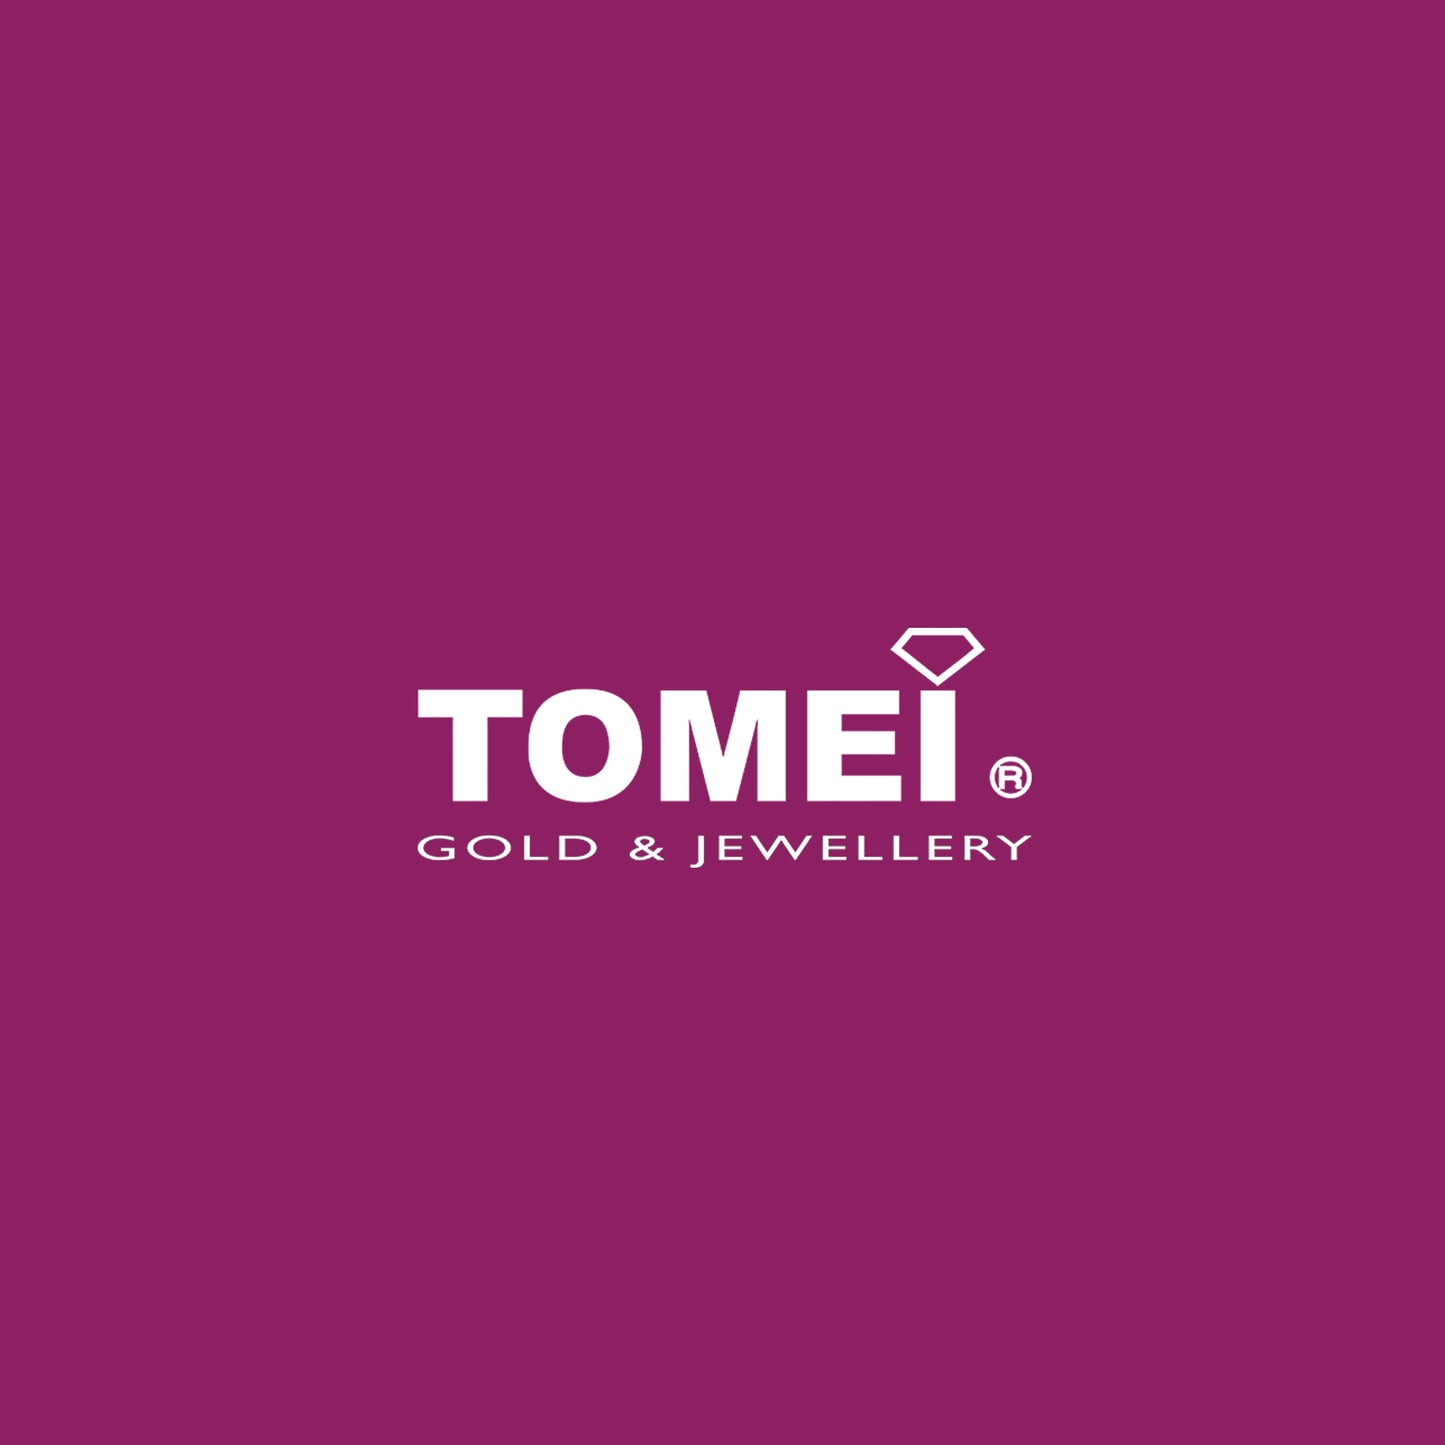 TOMEI Majestic Blue Earrings, Sapphire Diamond White Gold 750 (E2156)